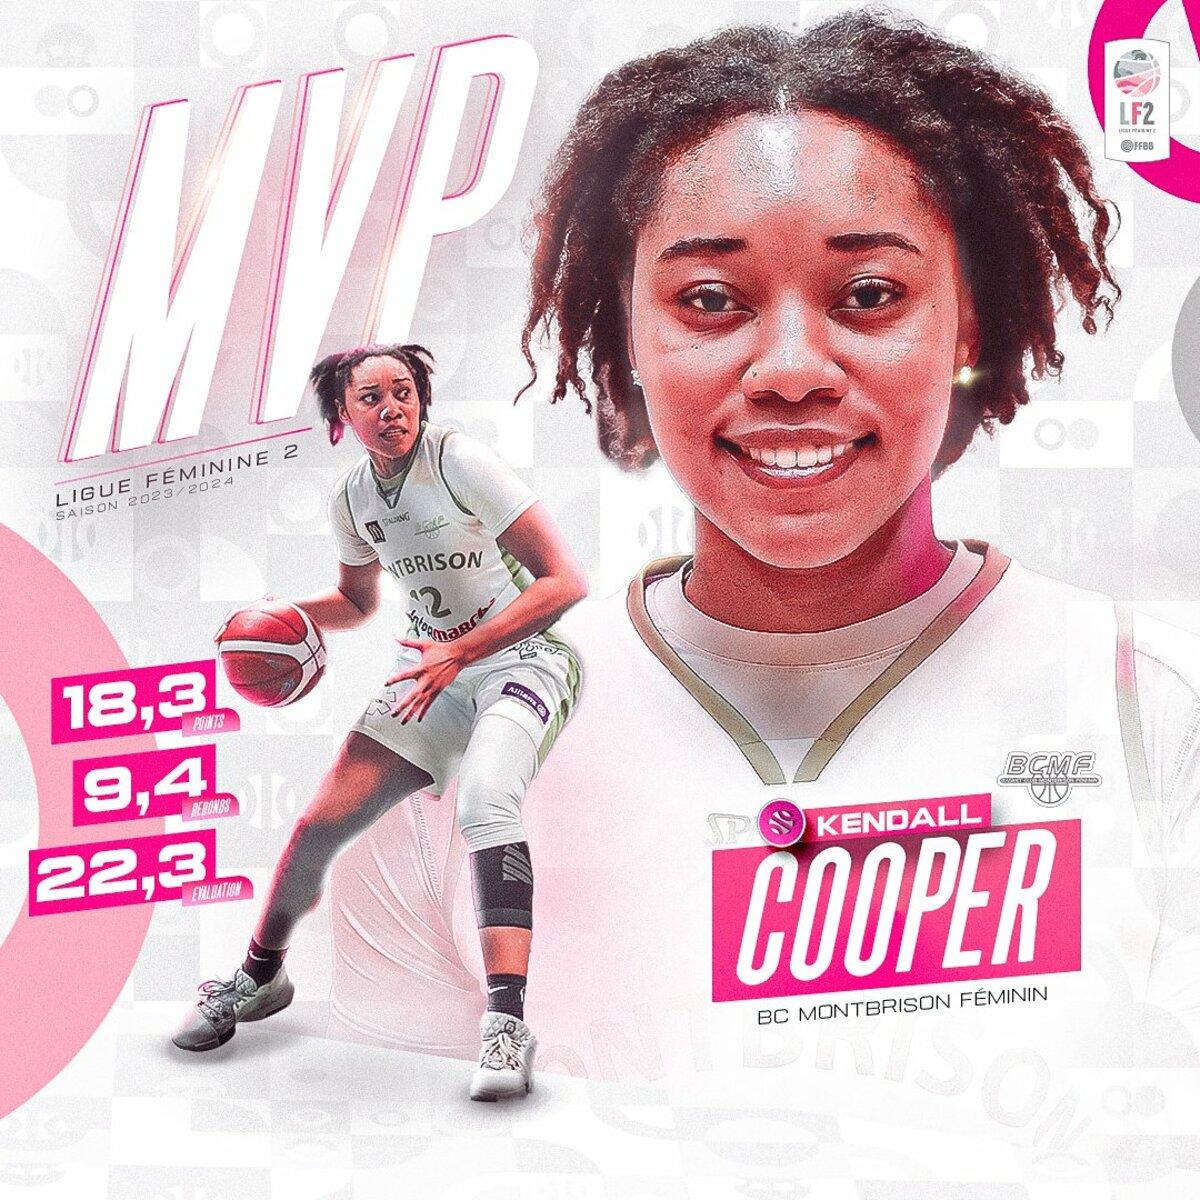 Kendall Cooper MVP de la saison de LF2, Corinne Benintendi meilleure coach